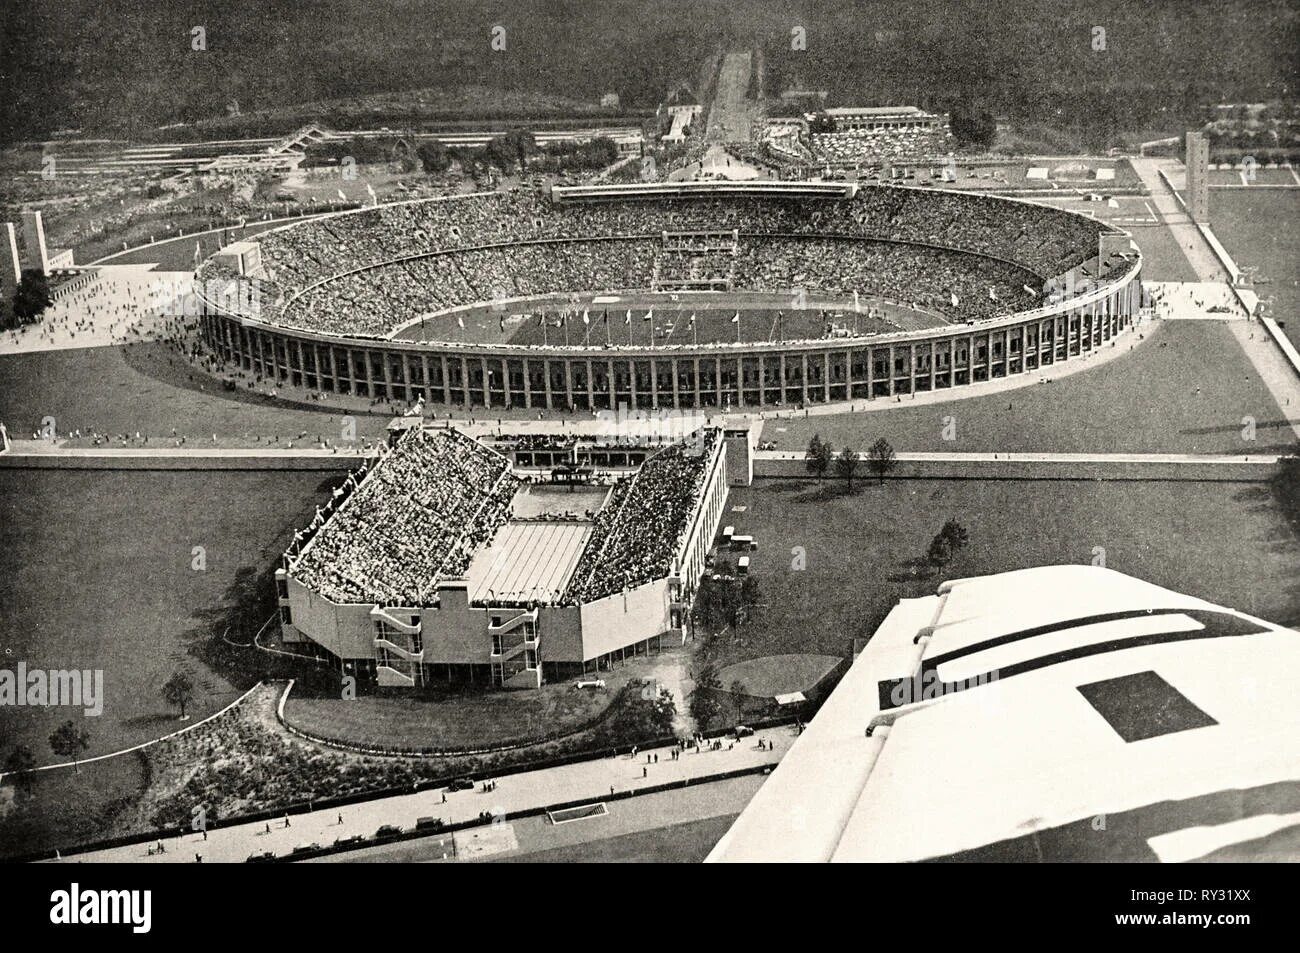 Xi олимпийские игры. 1936 Берлин "Олимпиаштадион". Стадион в Берлине 1936. Олимпийский стадион Германия 1936. Олимпийские игры 1936 года в Берлине стадион.